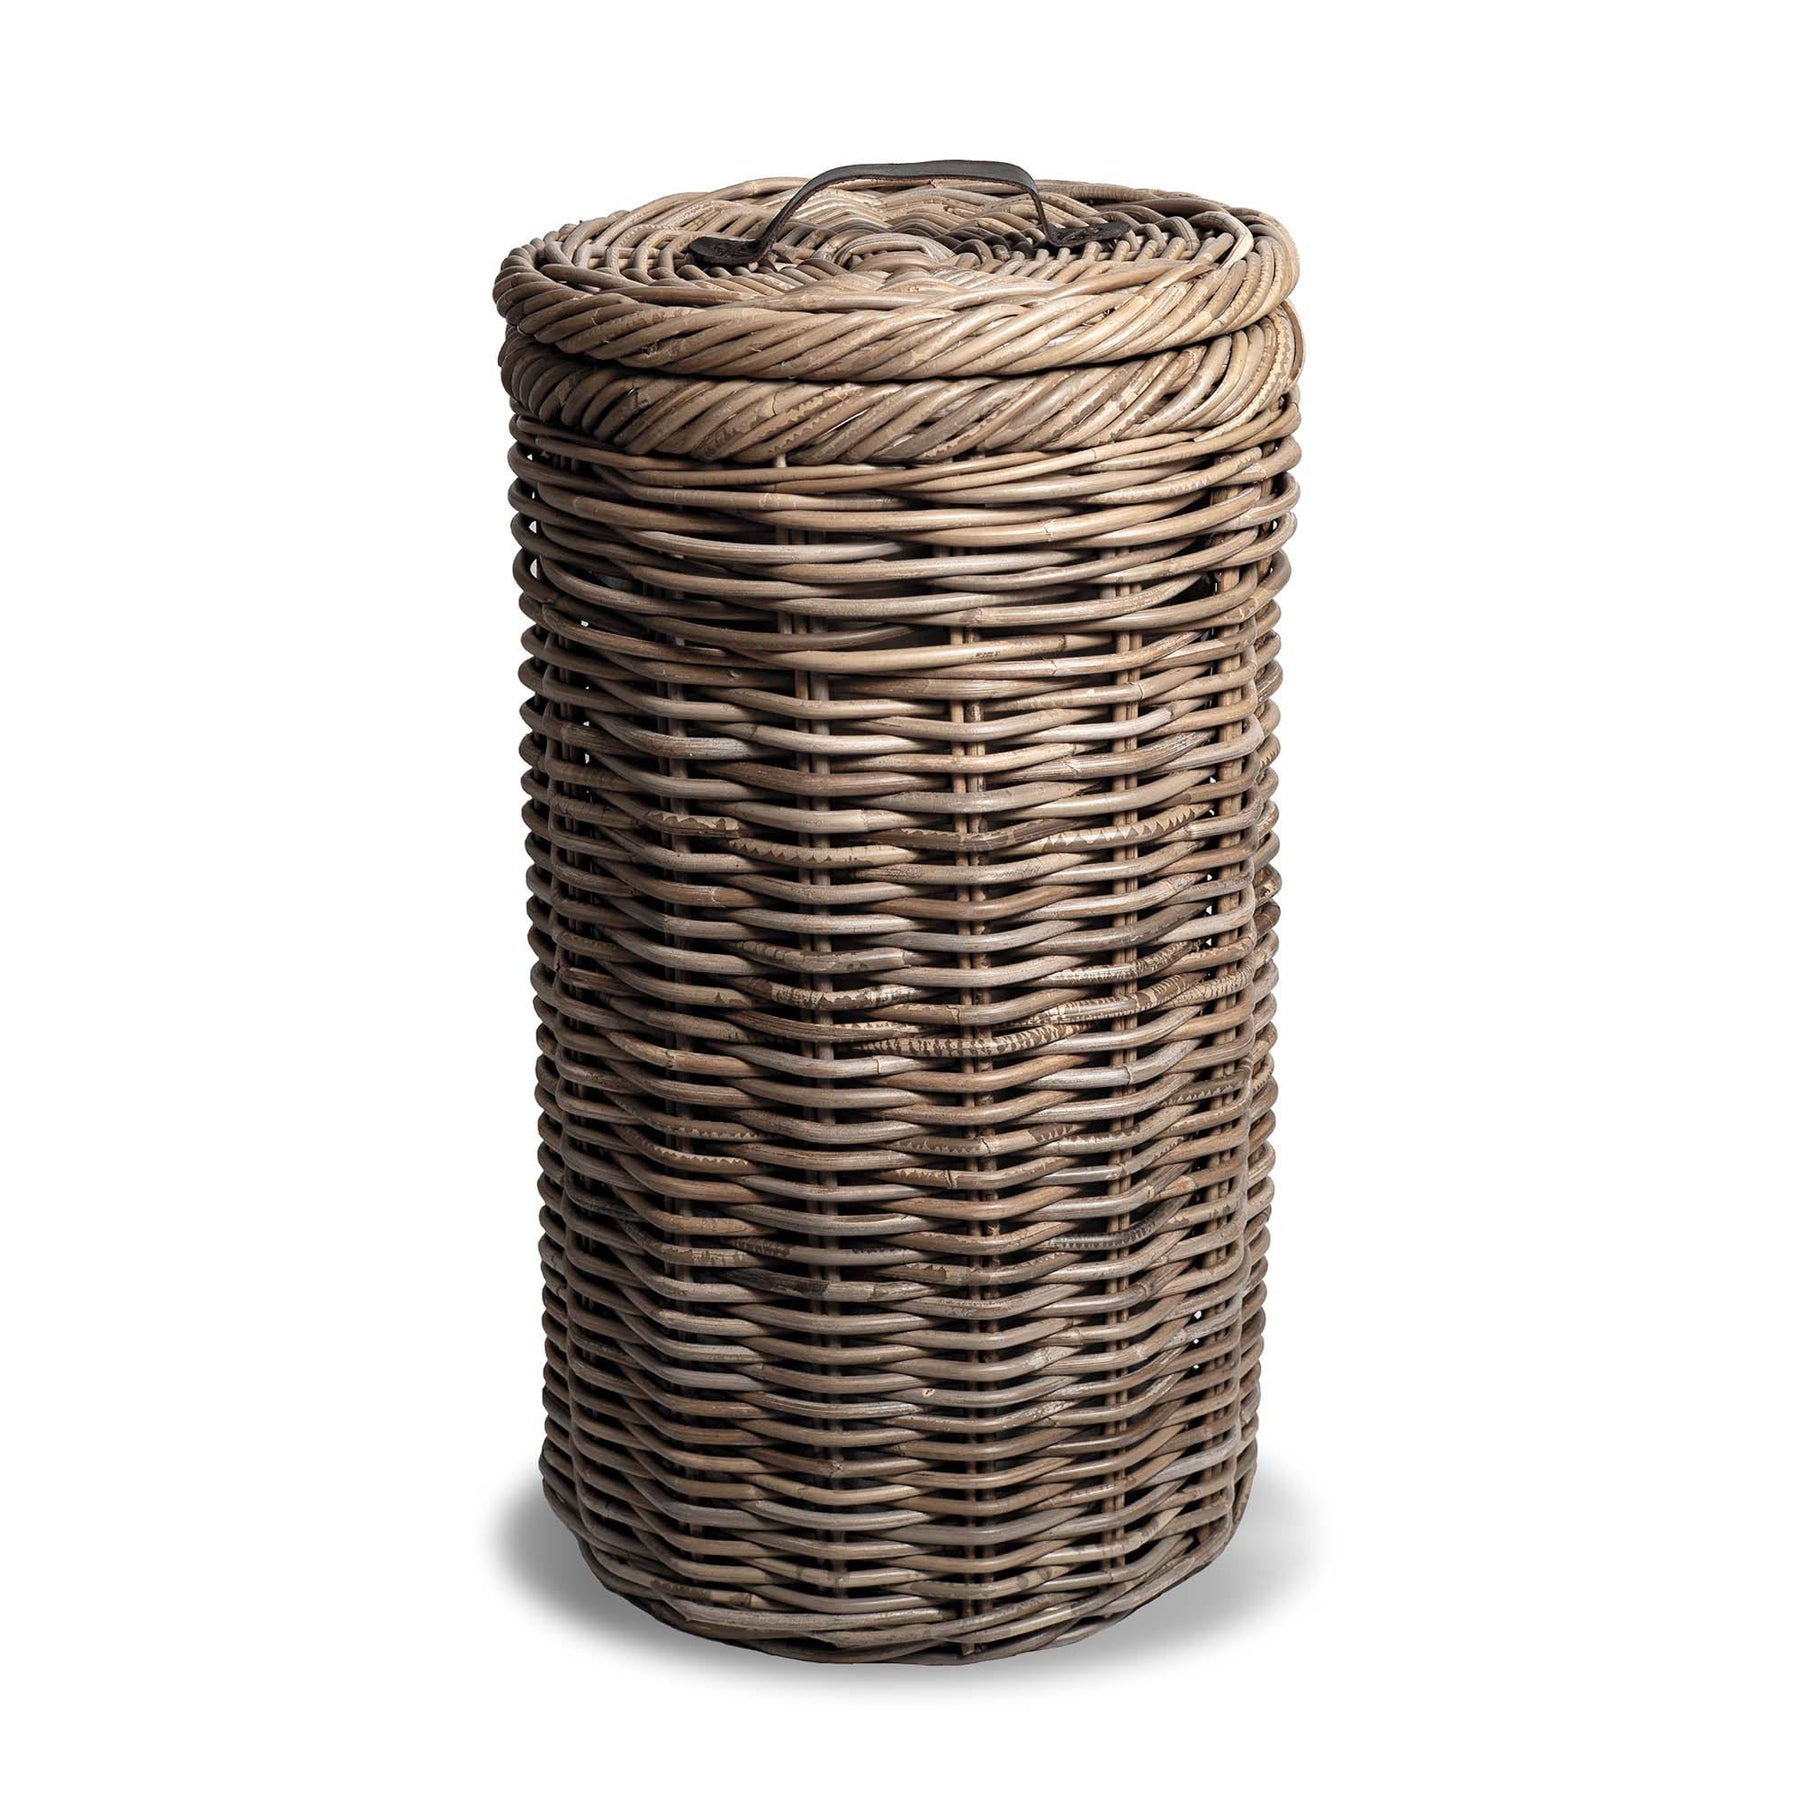 Wicker Kitchen Trash Basket with Metal Liner